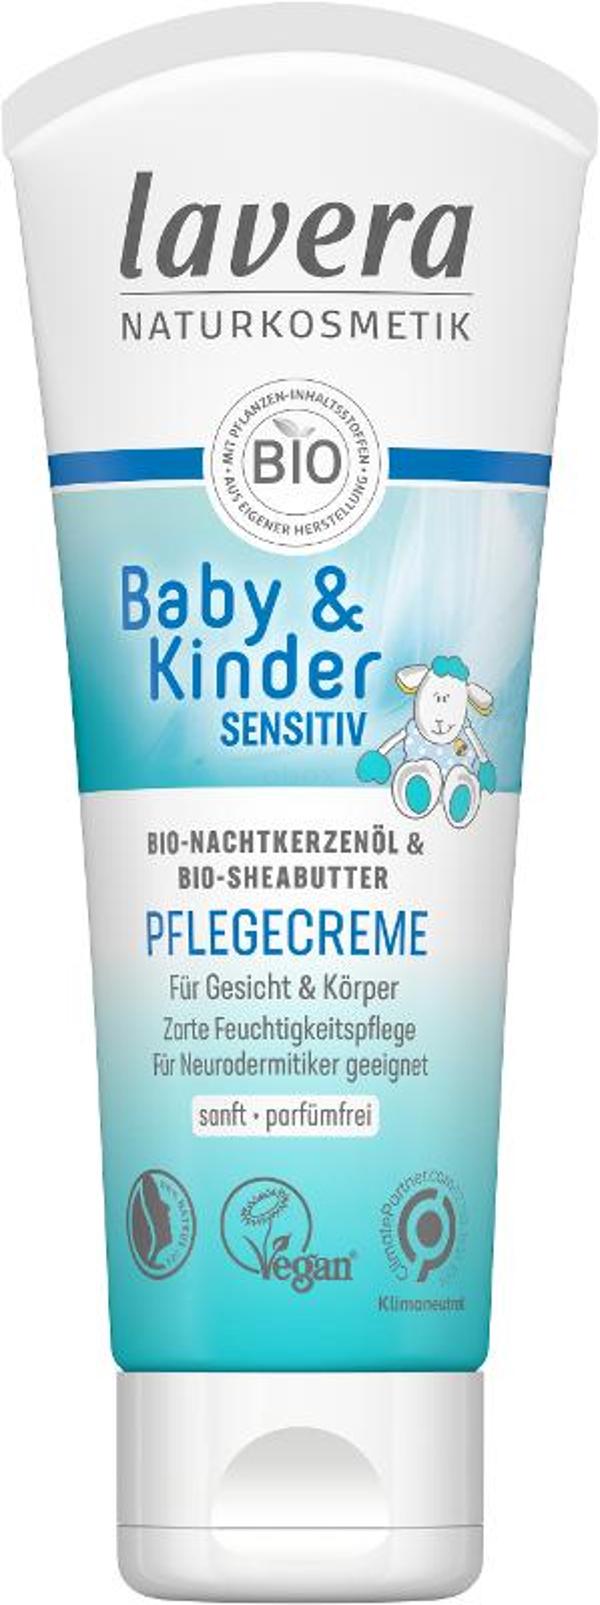 Produktfoto zu Baby u Kind Pflegecreme Sensitiv 75ml